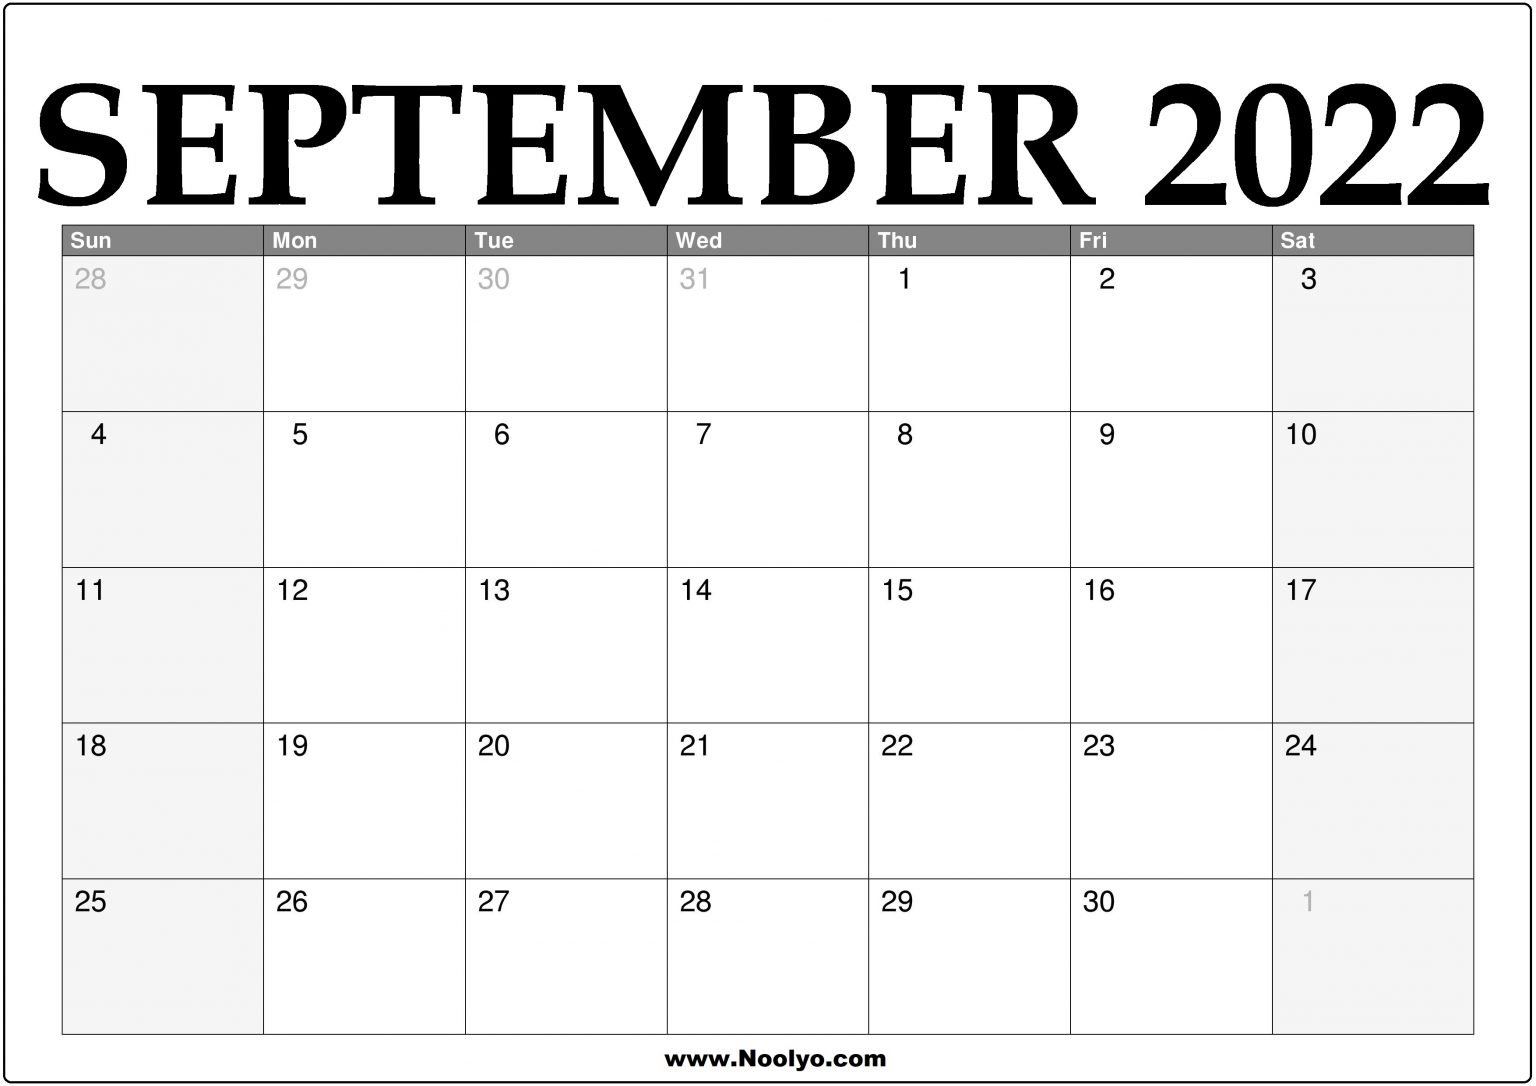 September 2022 Calendars For Word Excel Pdf September 2022 Calendar Free Printable Calendar